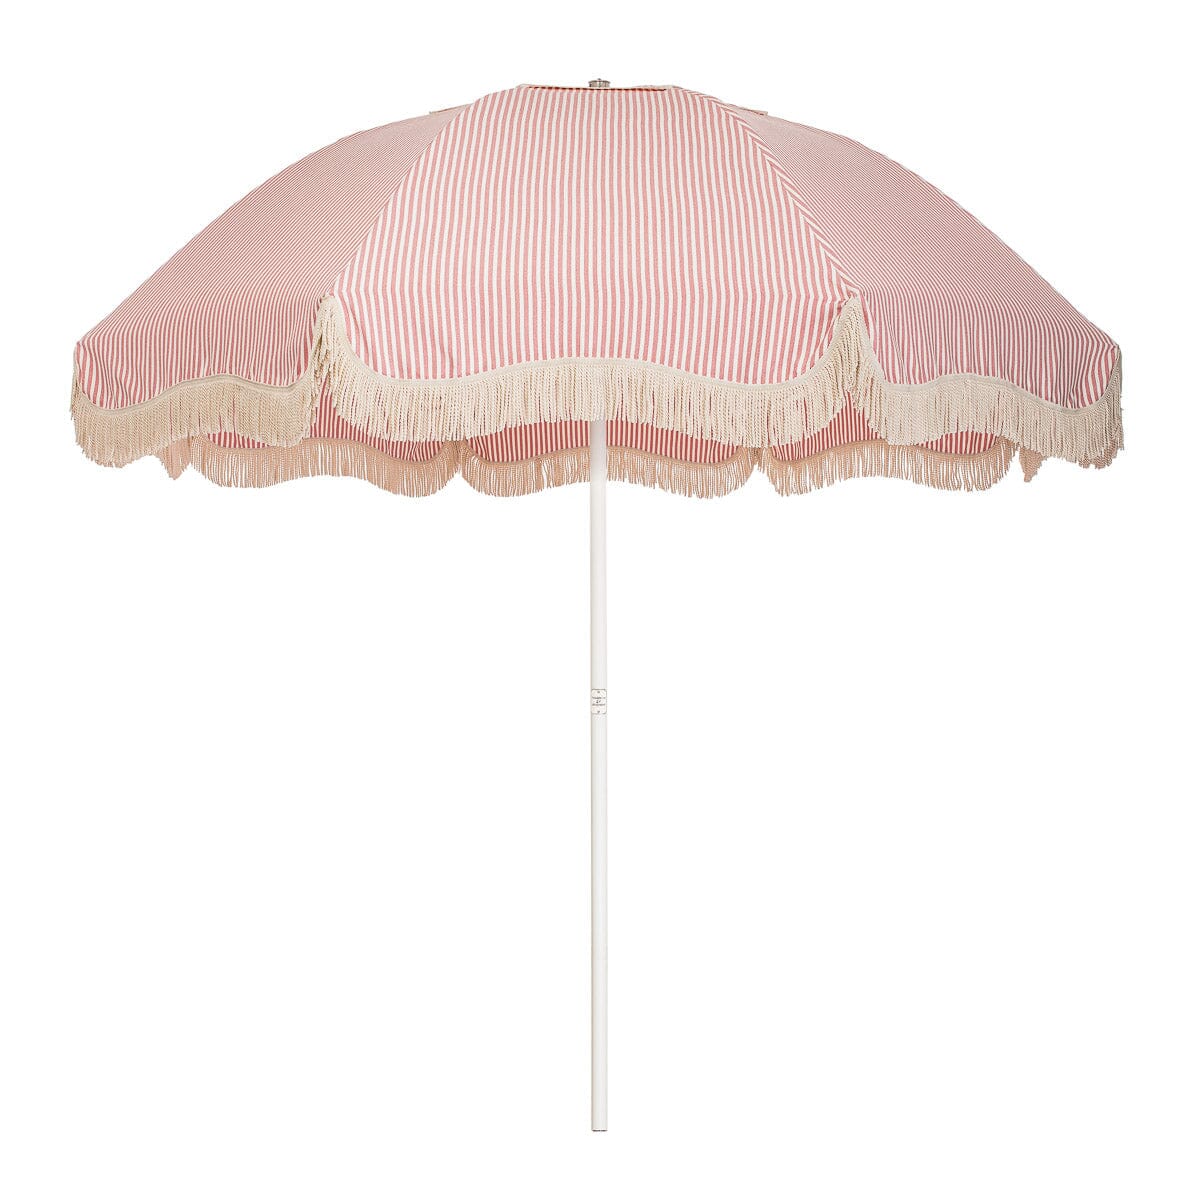 pink stripe umbrella with white fringe on white background forward facing